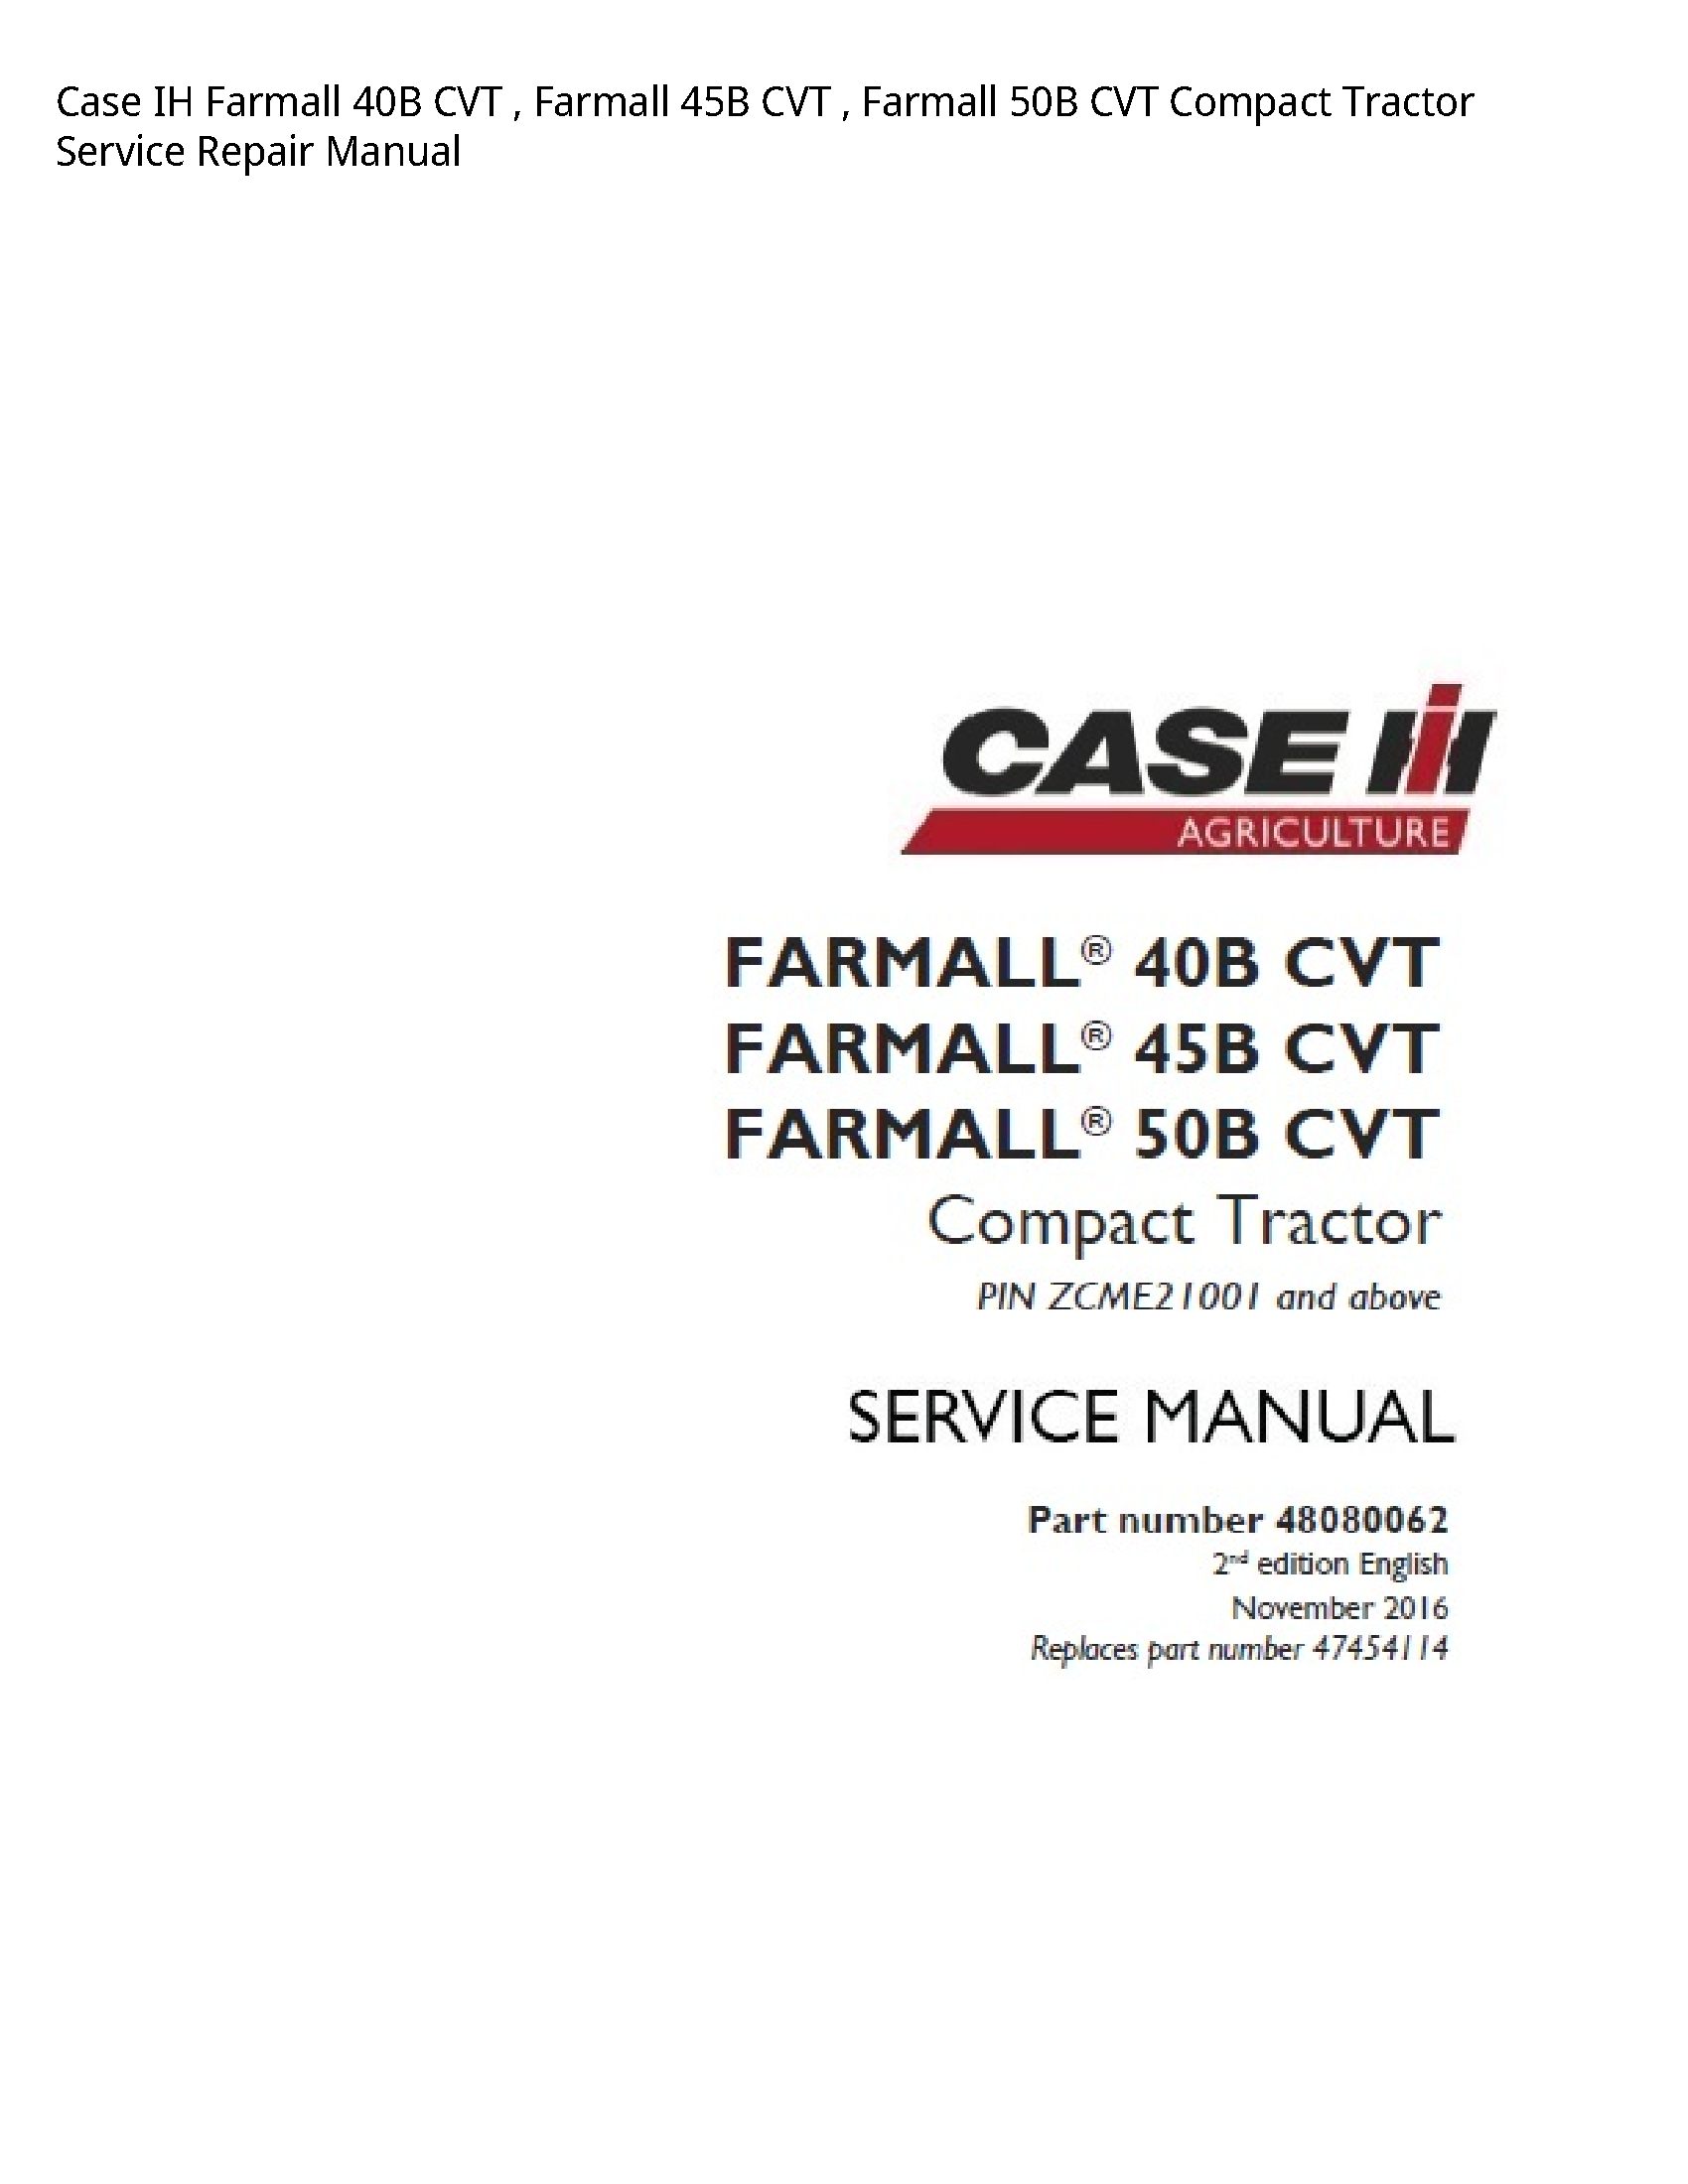 Case/Case IH 40B IH Farmall CVT Farmall CVT Farmall CVT Compact Tractor manual